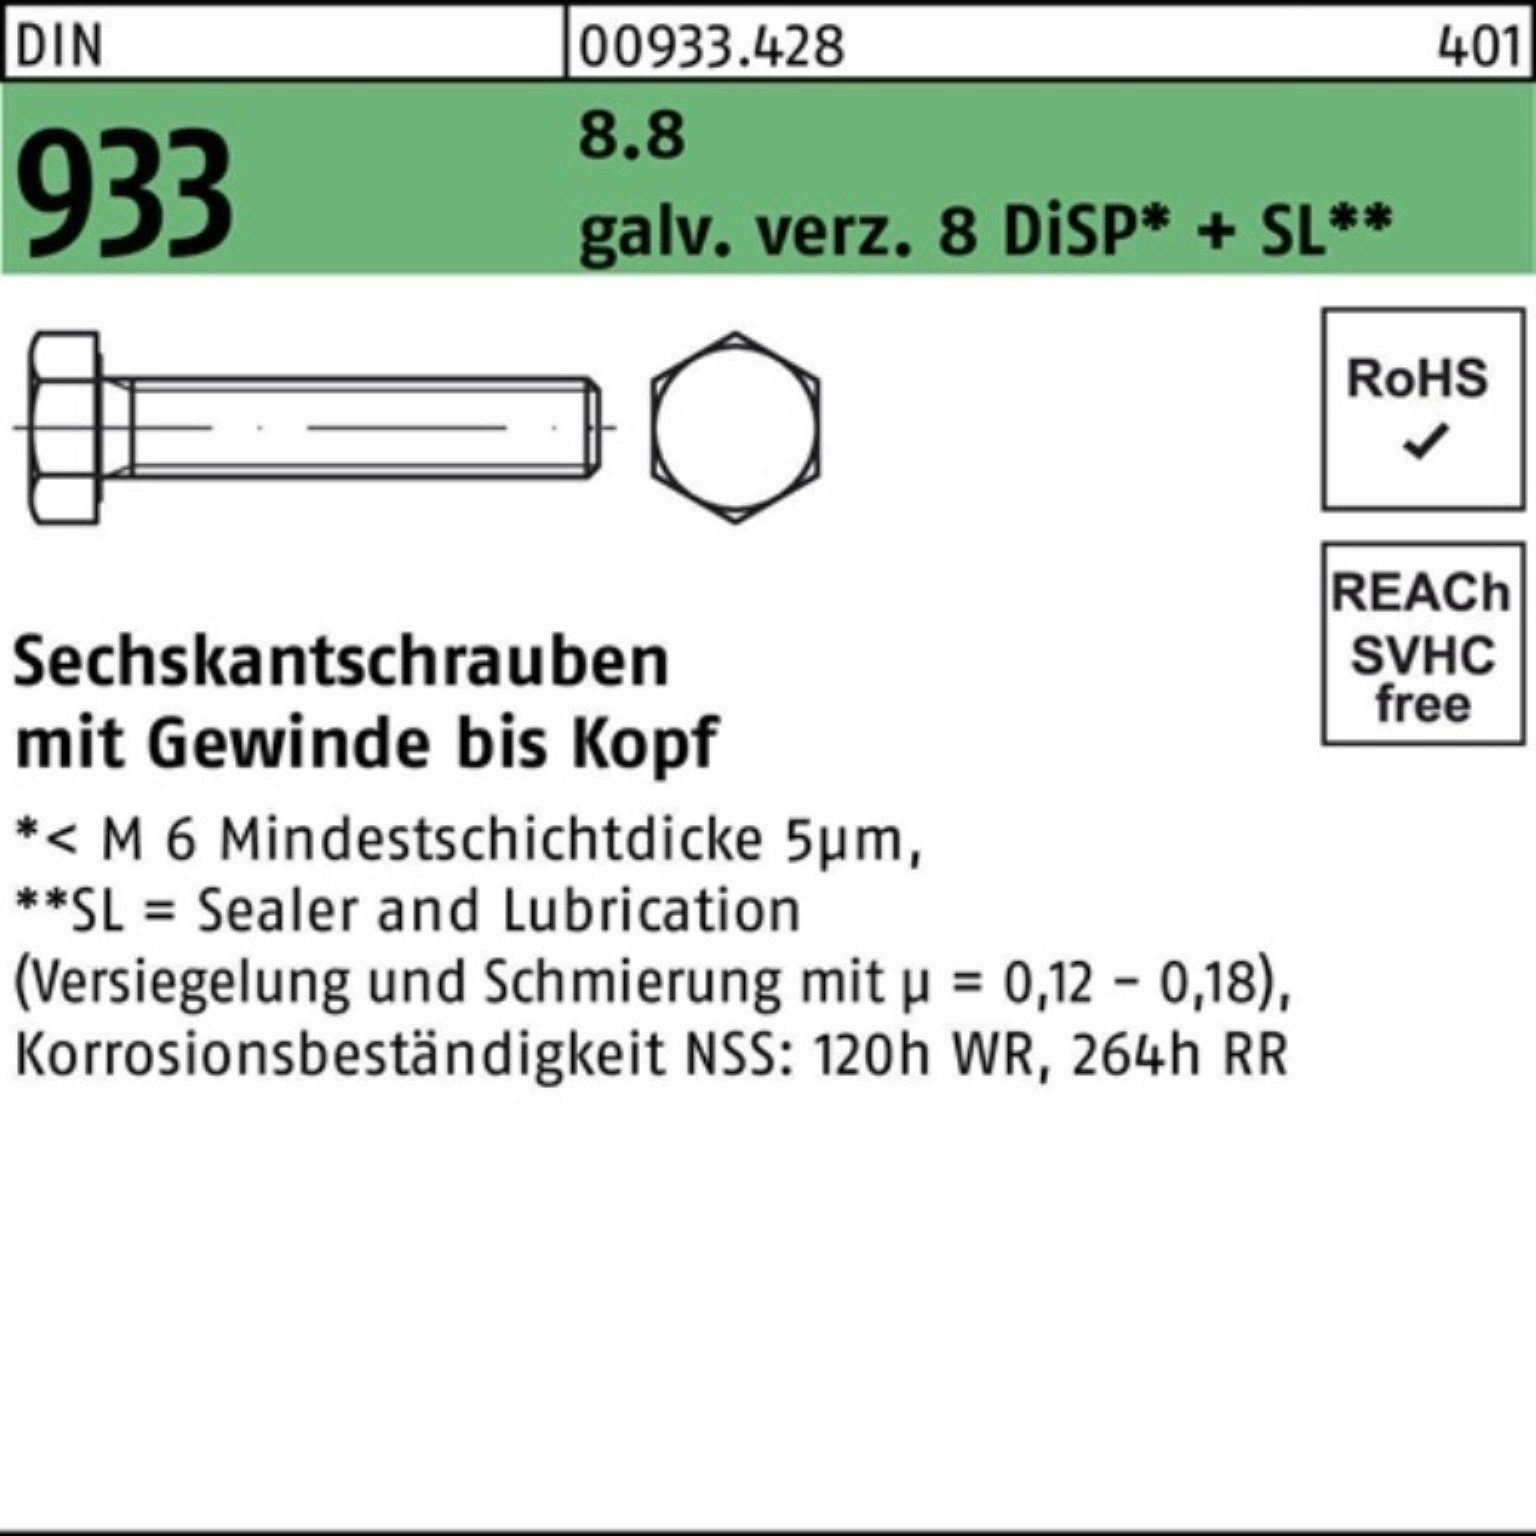 Reyher Sechskantschraube 100er Pack Sechskantschraube DIN 933 VG M20x 100 8.8 gal Zn 8 DiSP + S